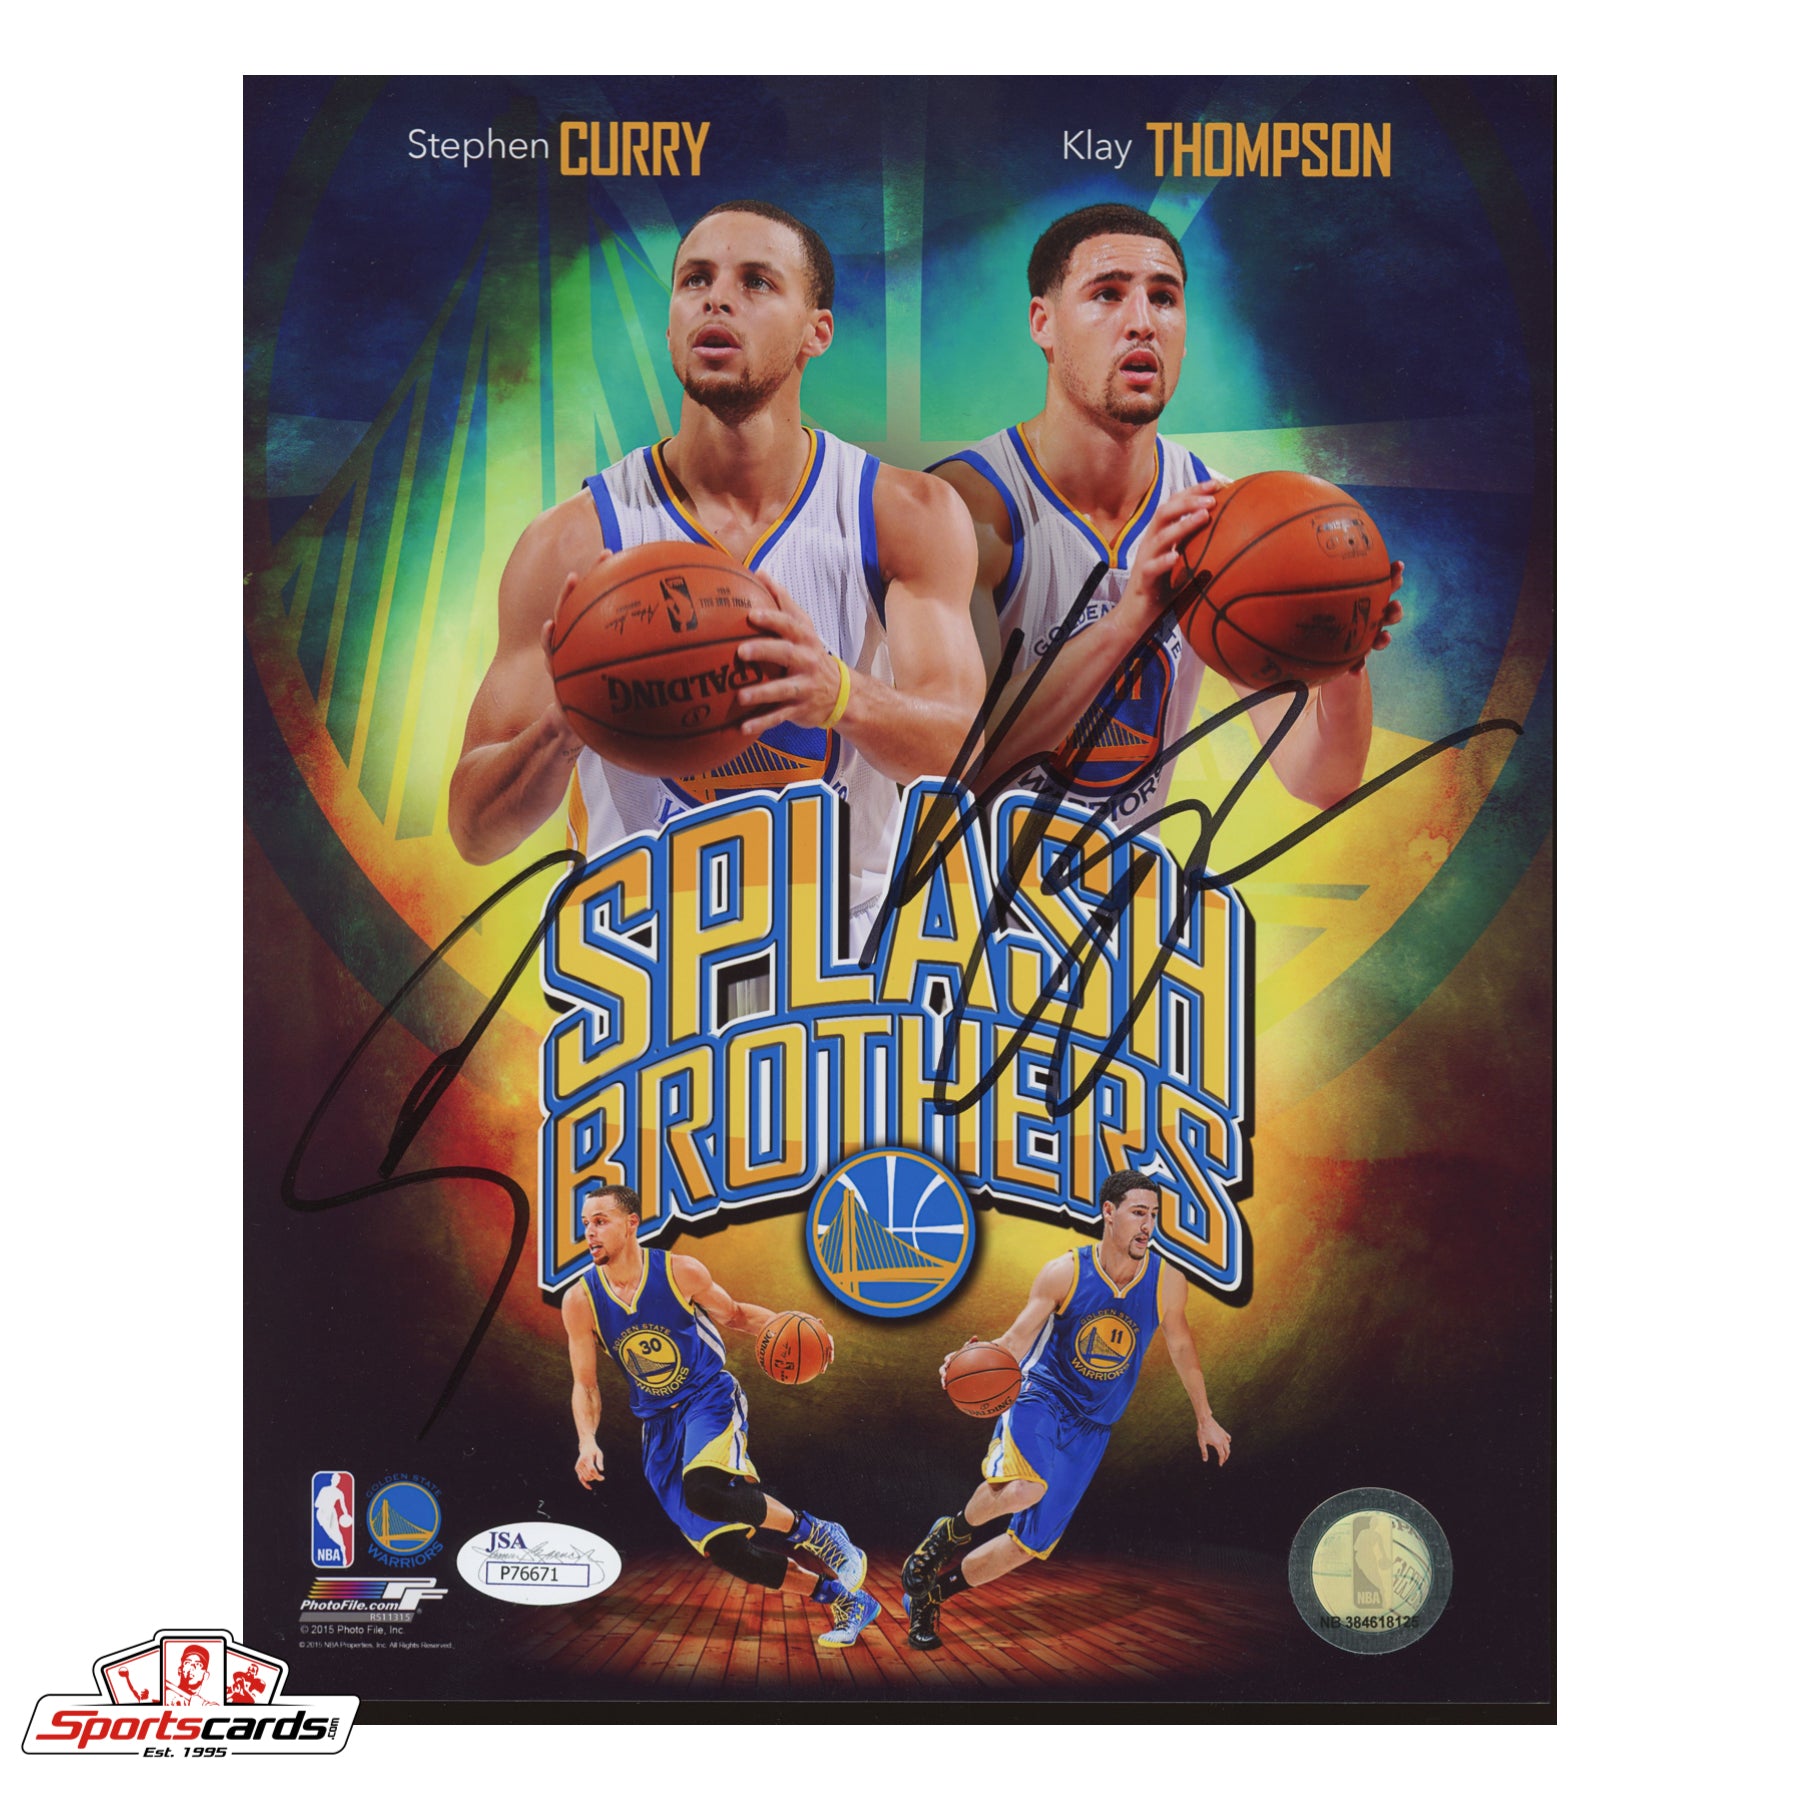 Steph Curry & Klay Thompson Signed 8x10 Photograph - JSA COA